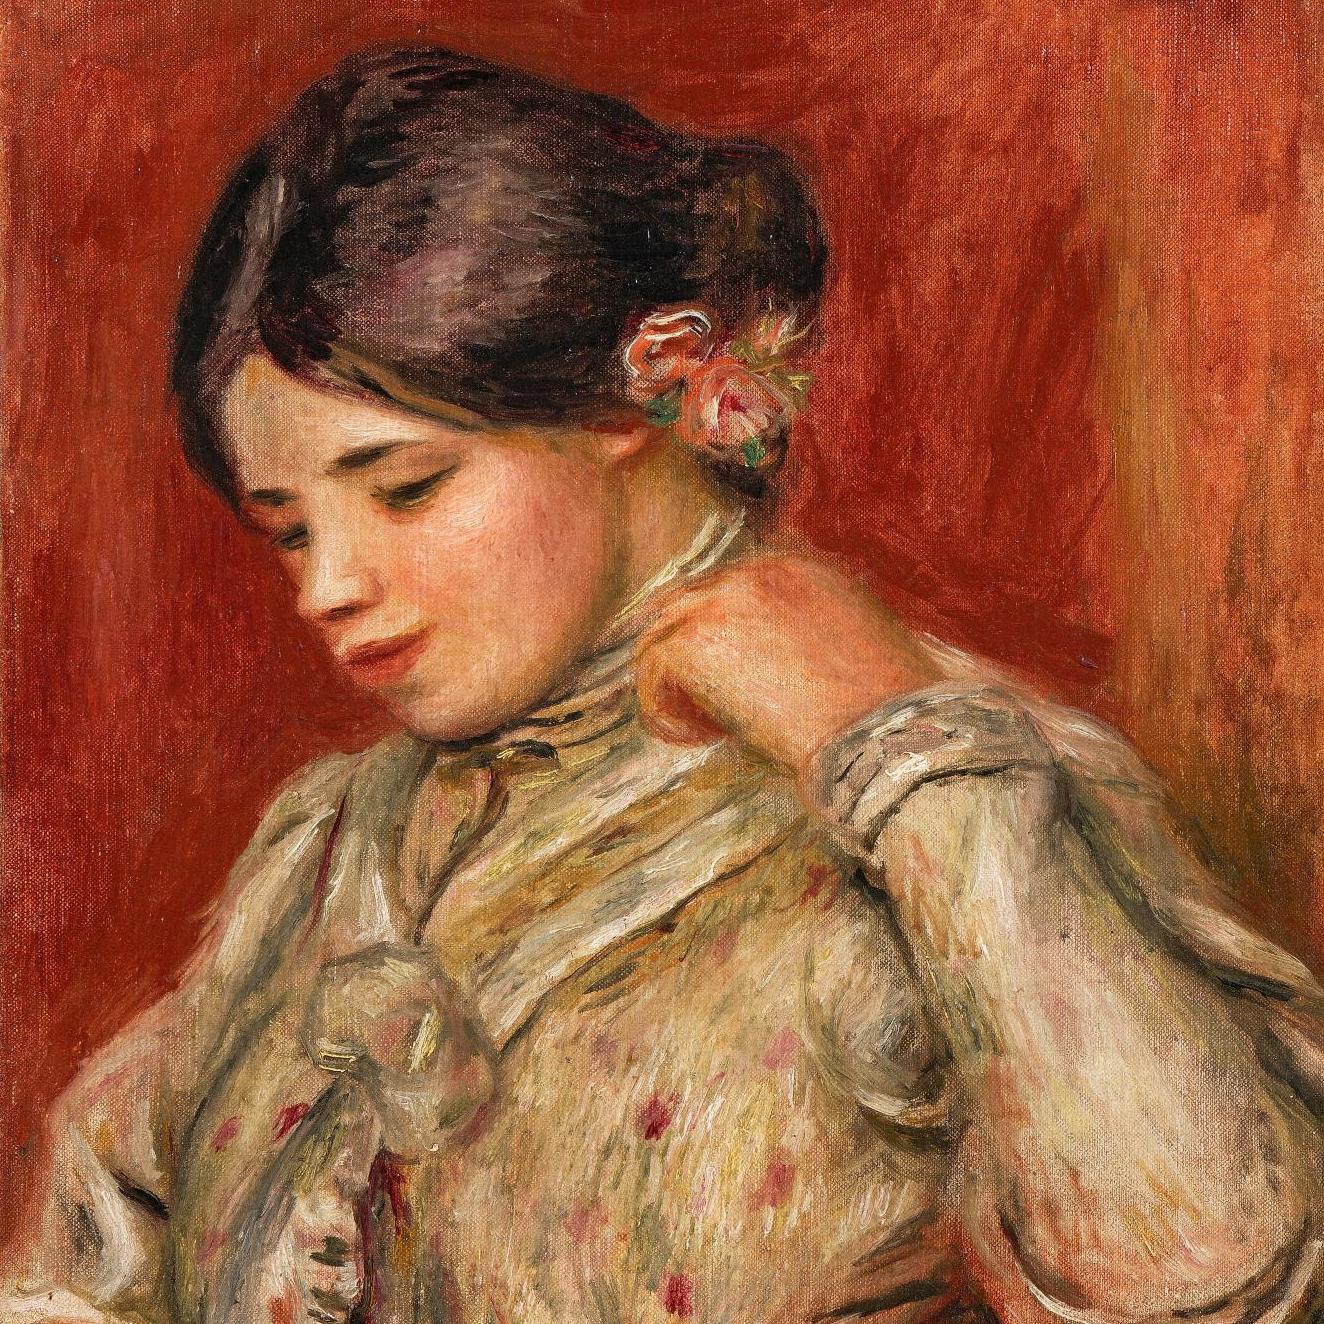 Une jeune femme de Renoir en plein soleil